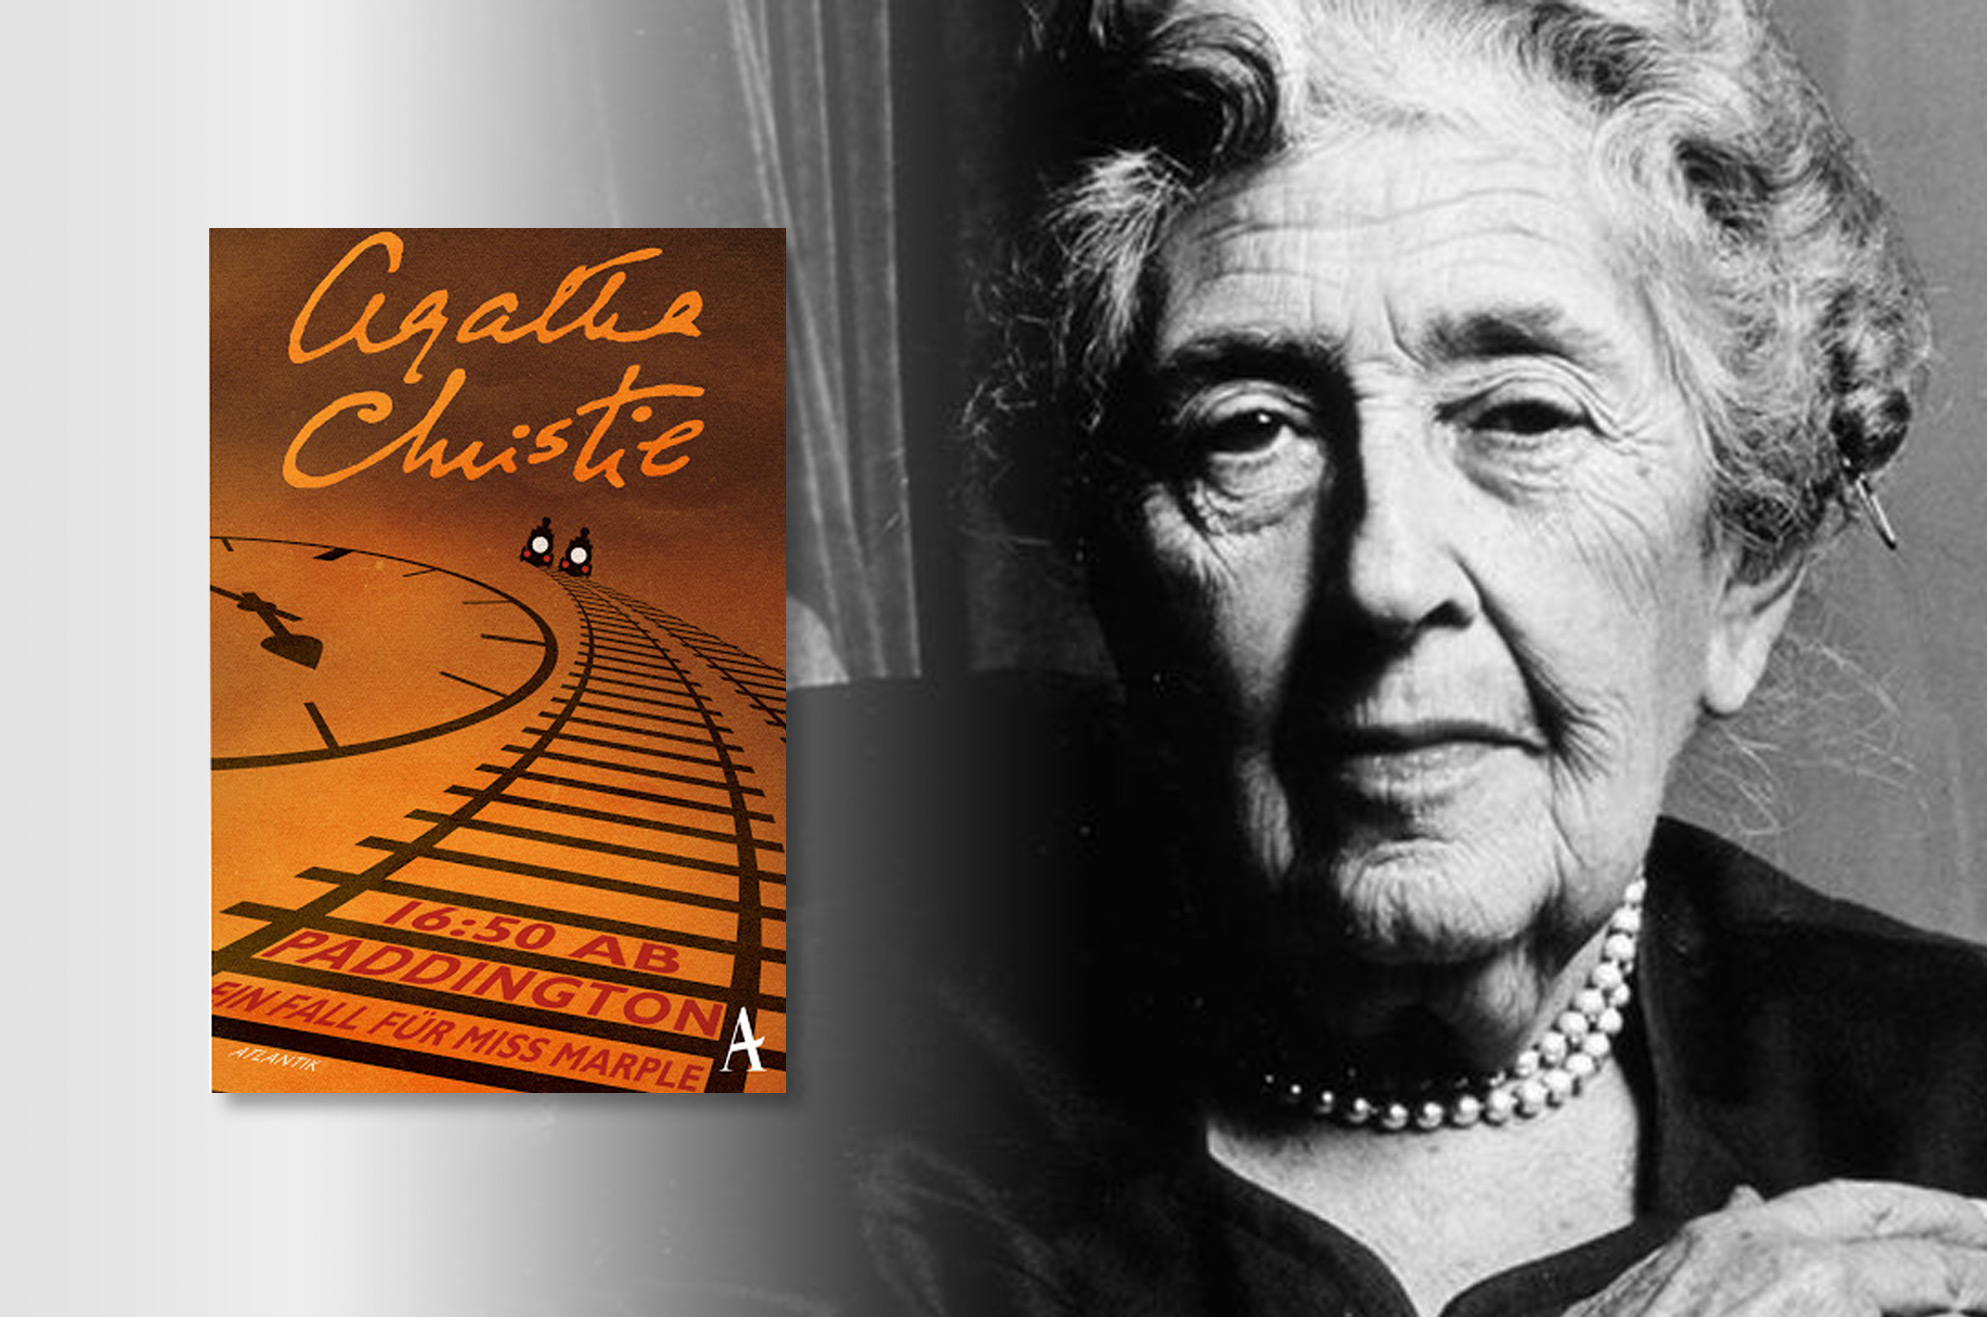 16.50 ab Paddington - Agatha Christie - eine Buchrezension - Agatha Christie 16 Uhr 50 Ab Paddington